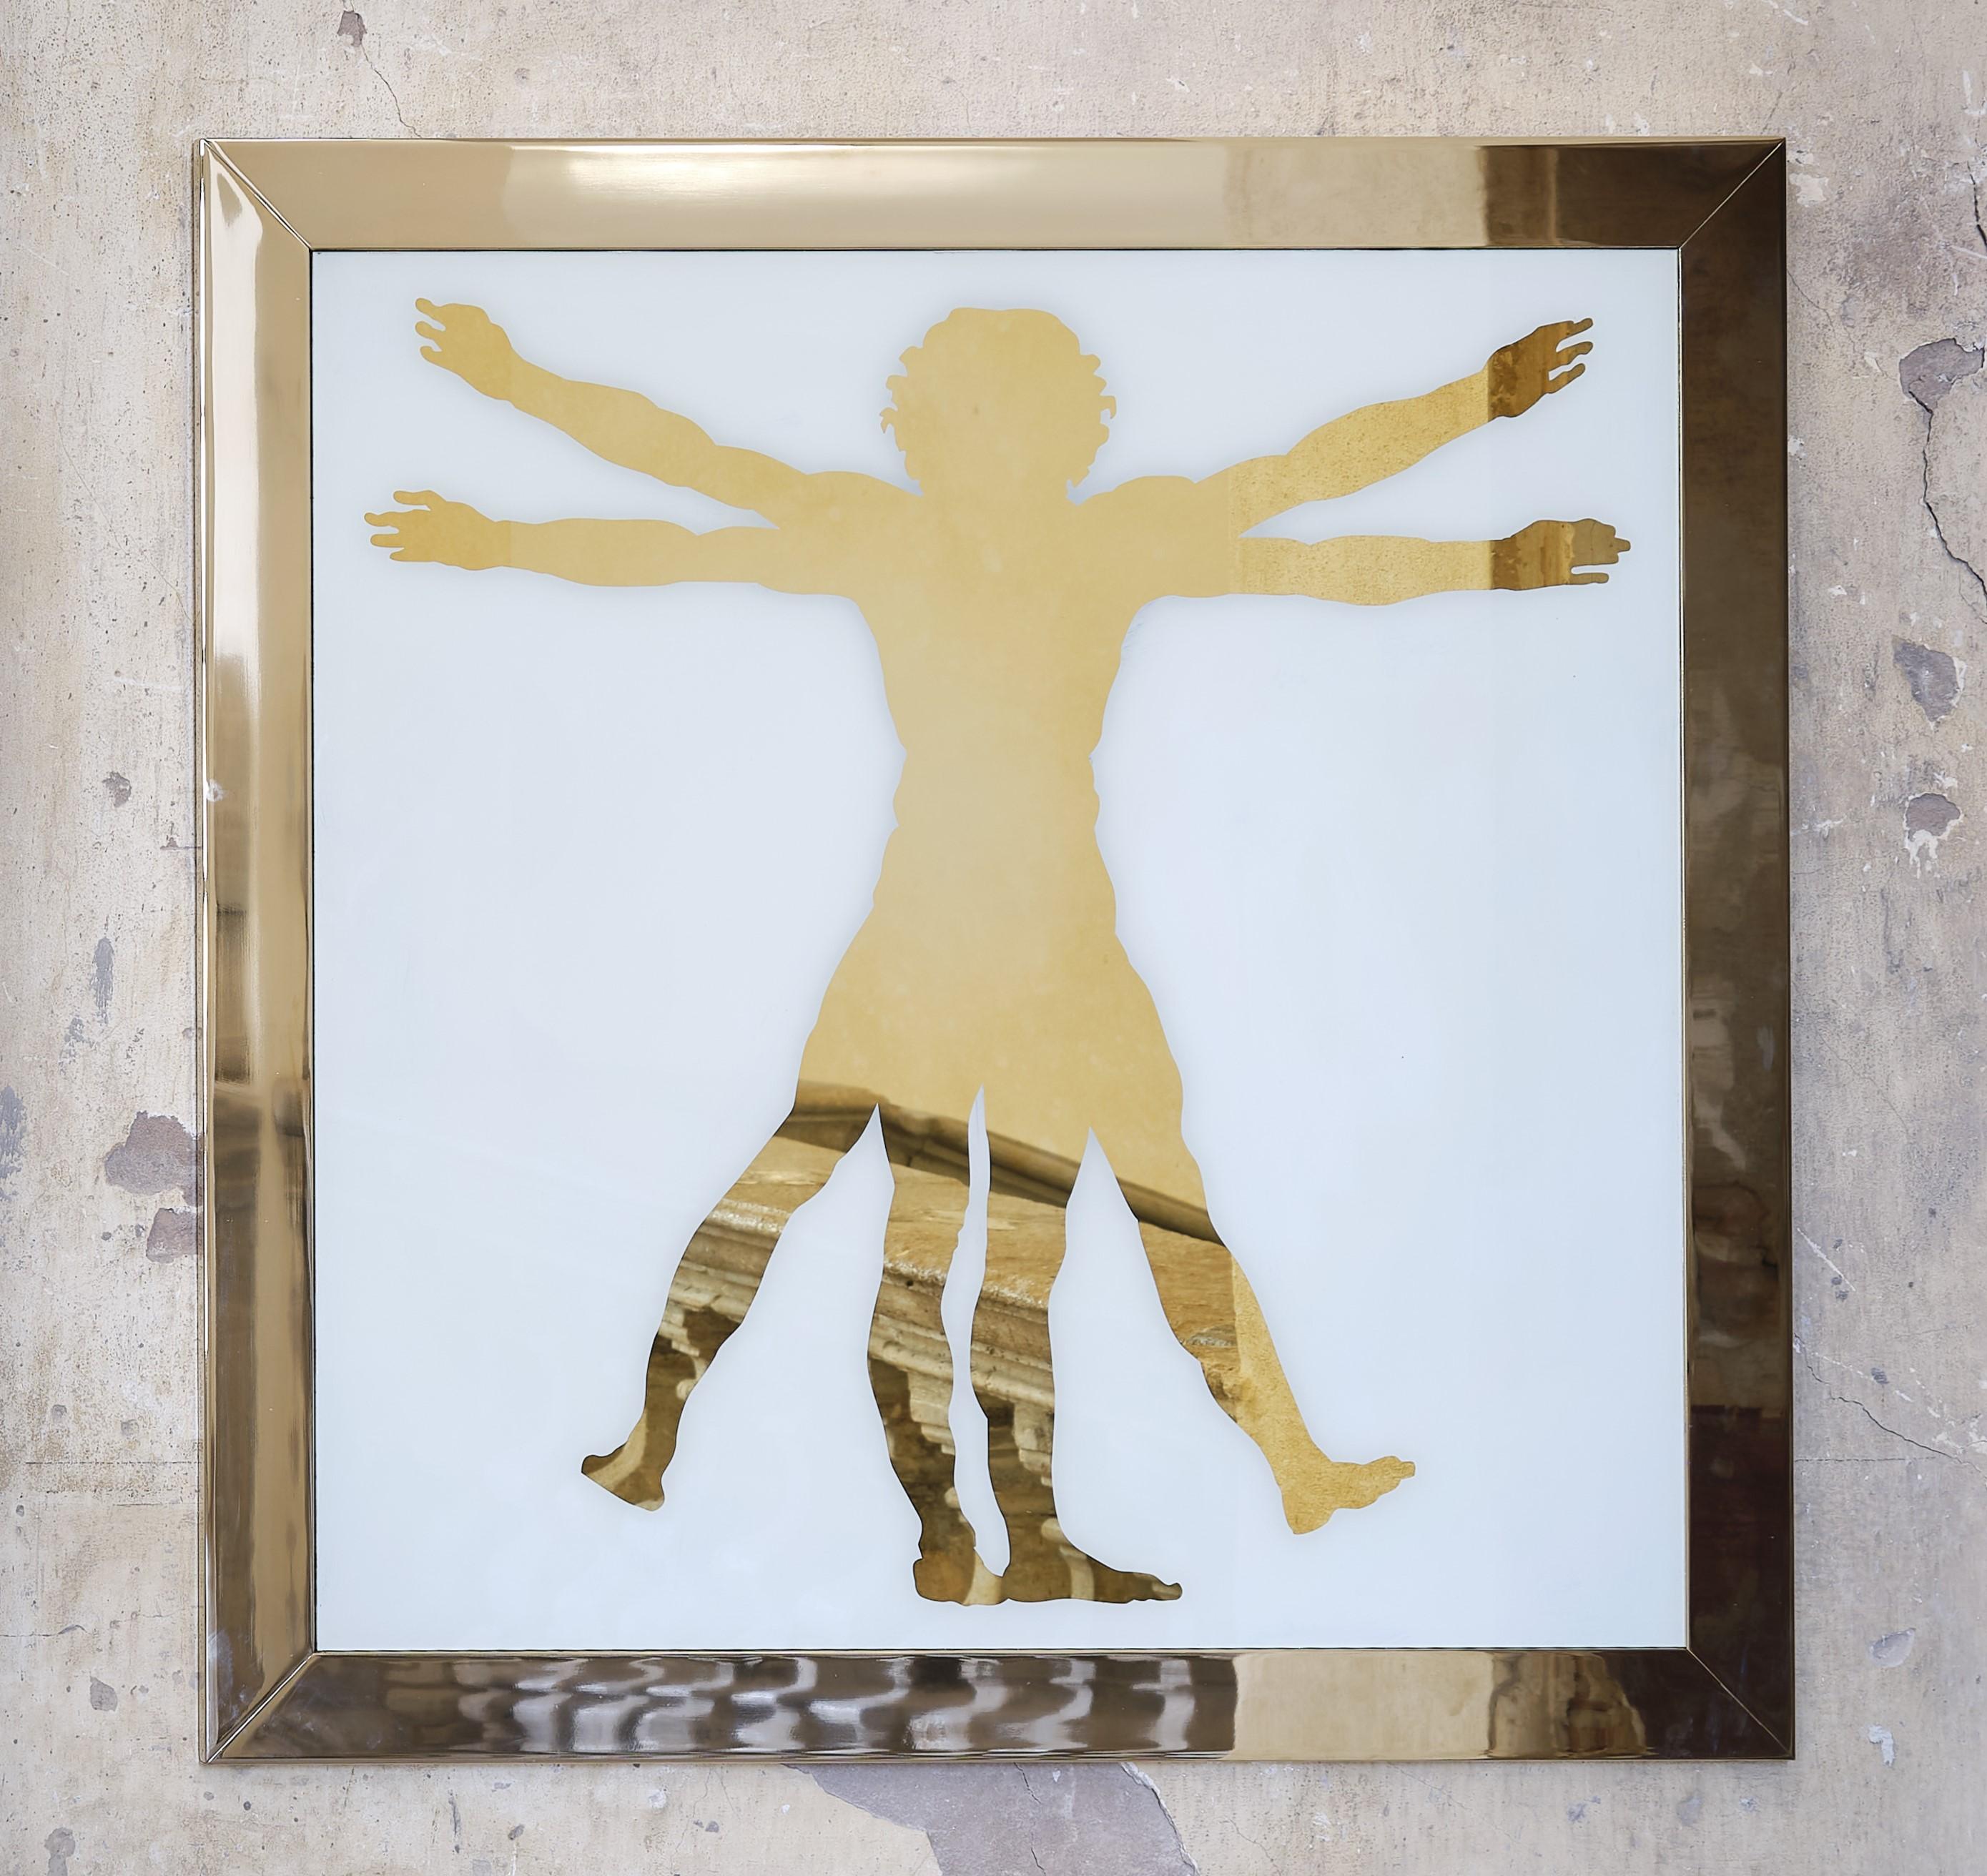 Leonardo Da Vinci, The Vitruvian Man, Icon Wall Decoration by Davide Medri
Dimensions: D 10 x W 116 x H 116 cm.
Materials: Golden mirror, metal structure.
Available in different colors and sizes.

Davide Medri was born in Cesena on August 7th 1967